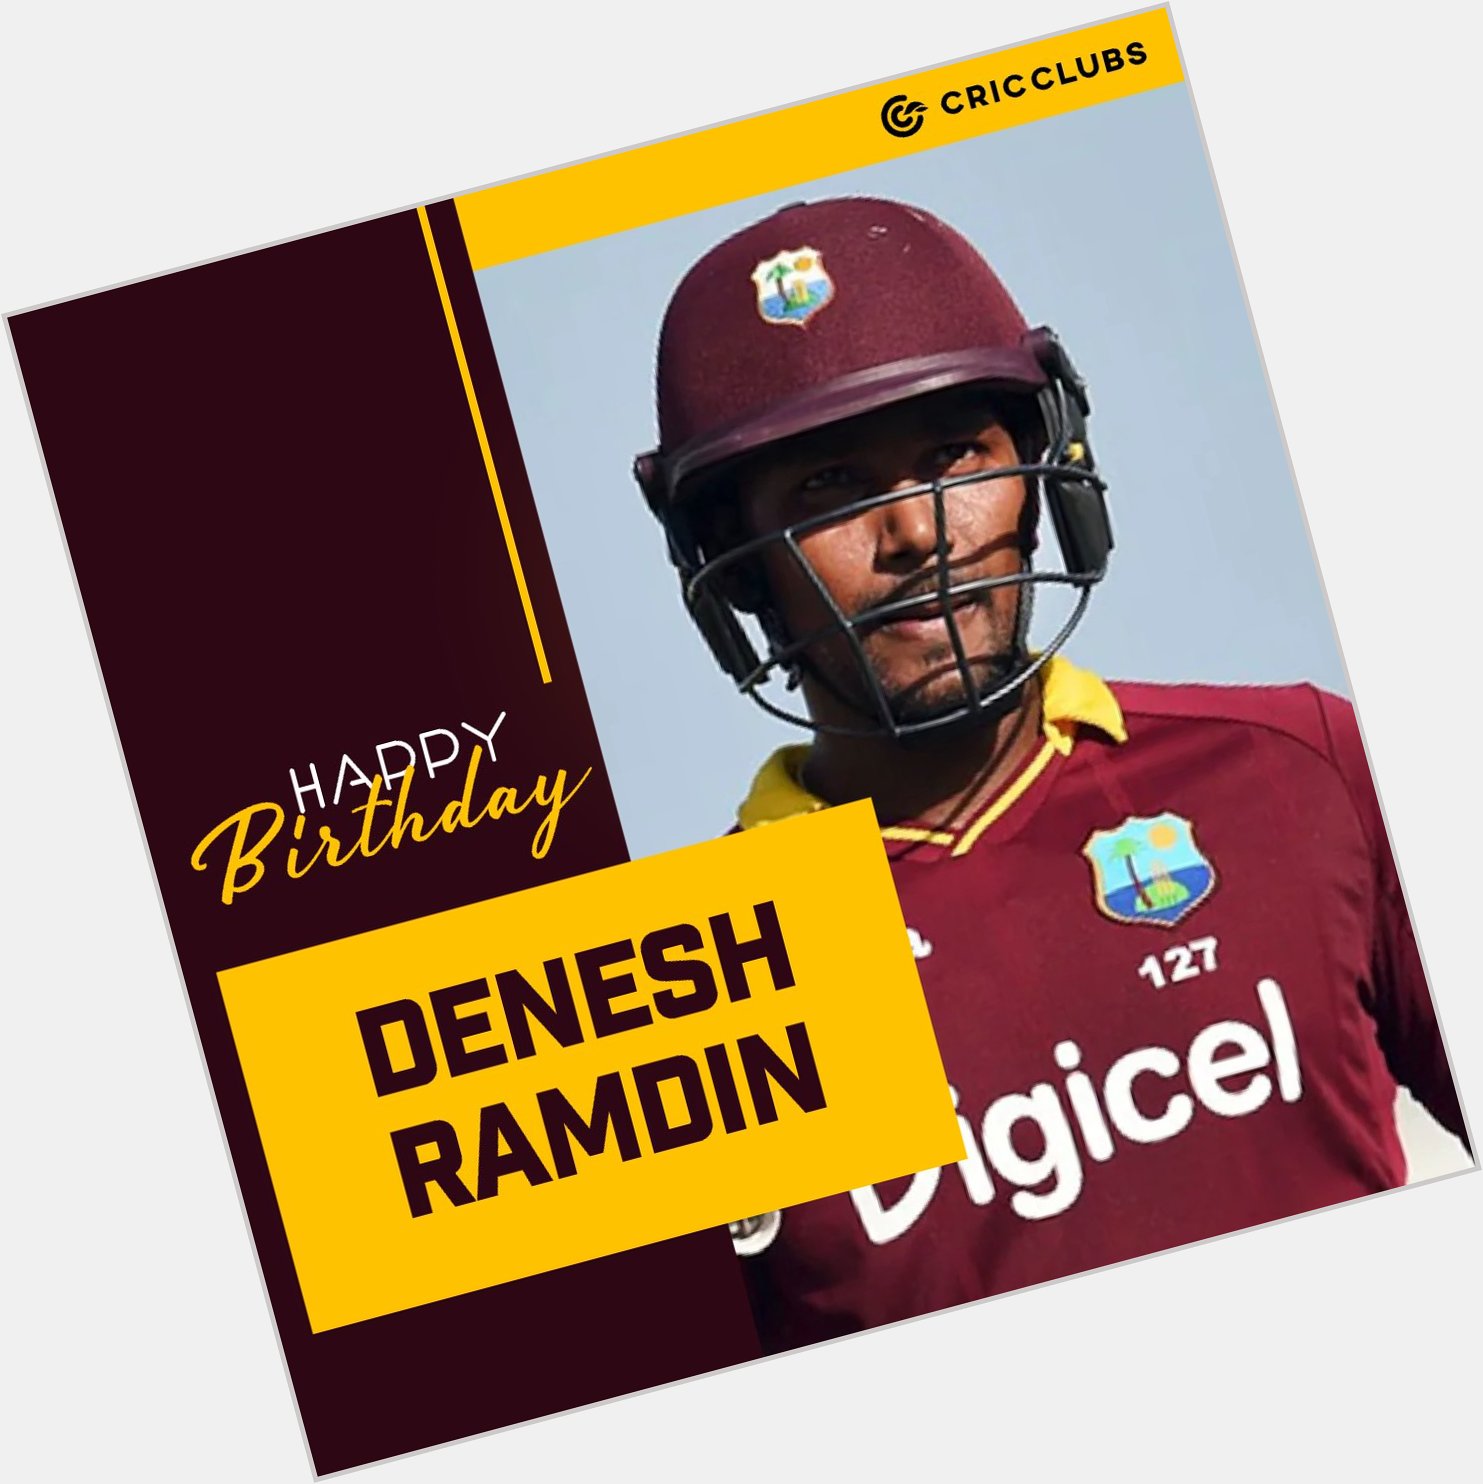 Here\s wishing the West Indian keeper batsman \Denesh Ramdin\ a very Happy Birthday 